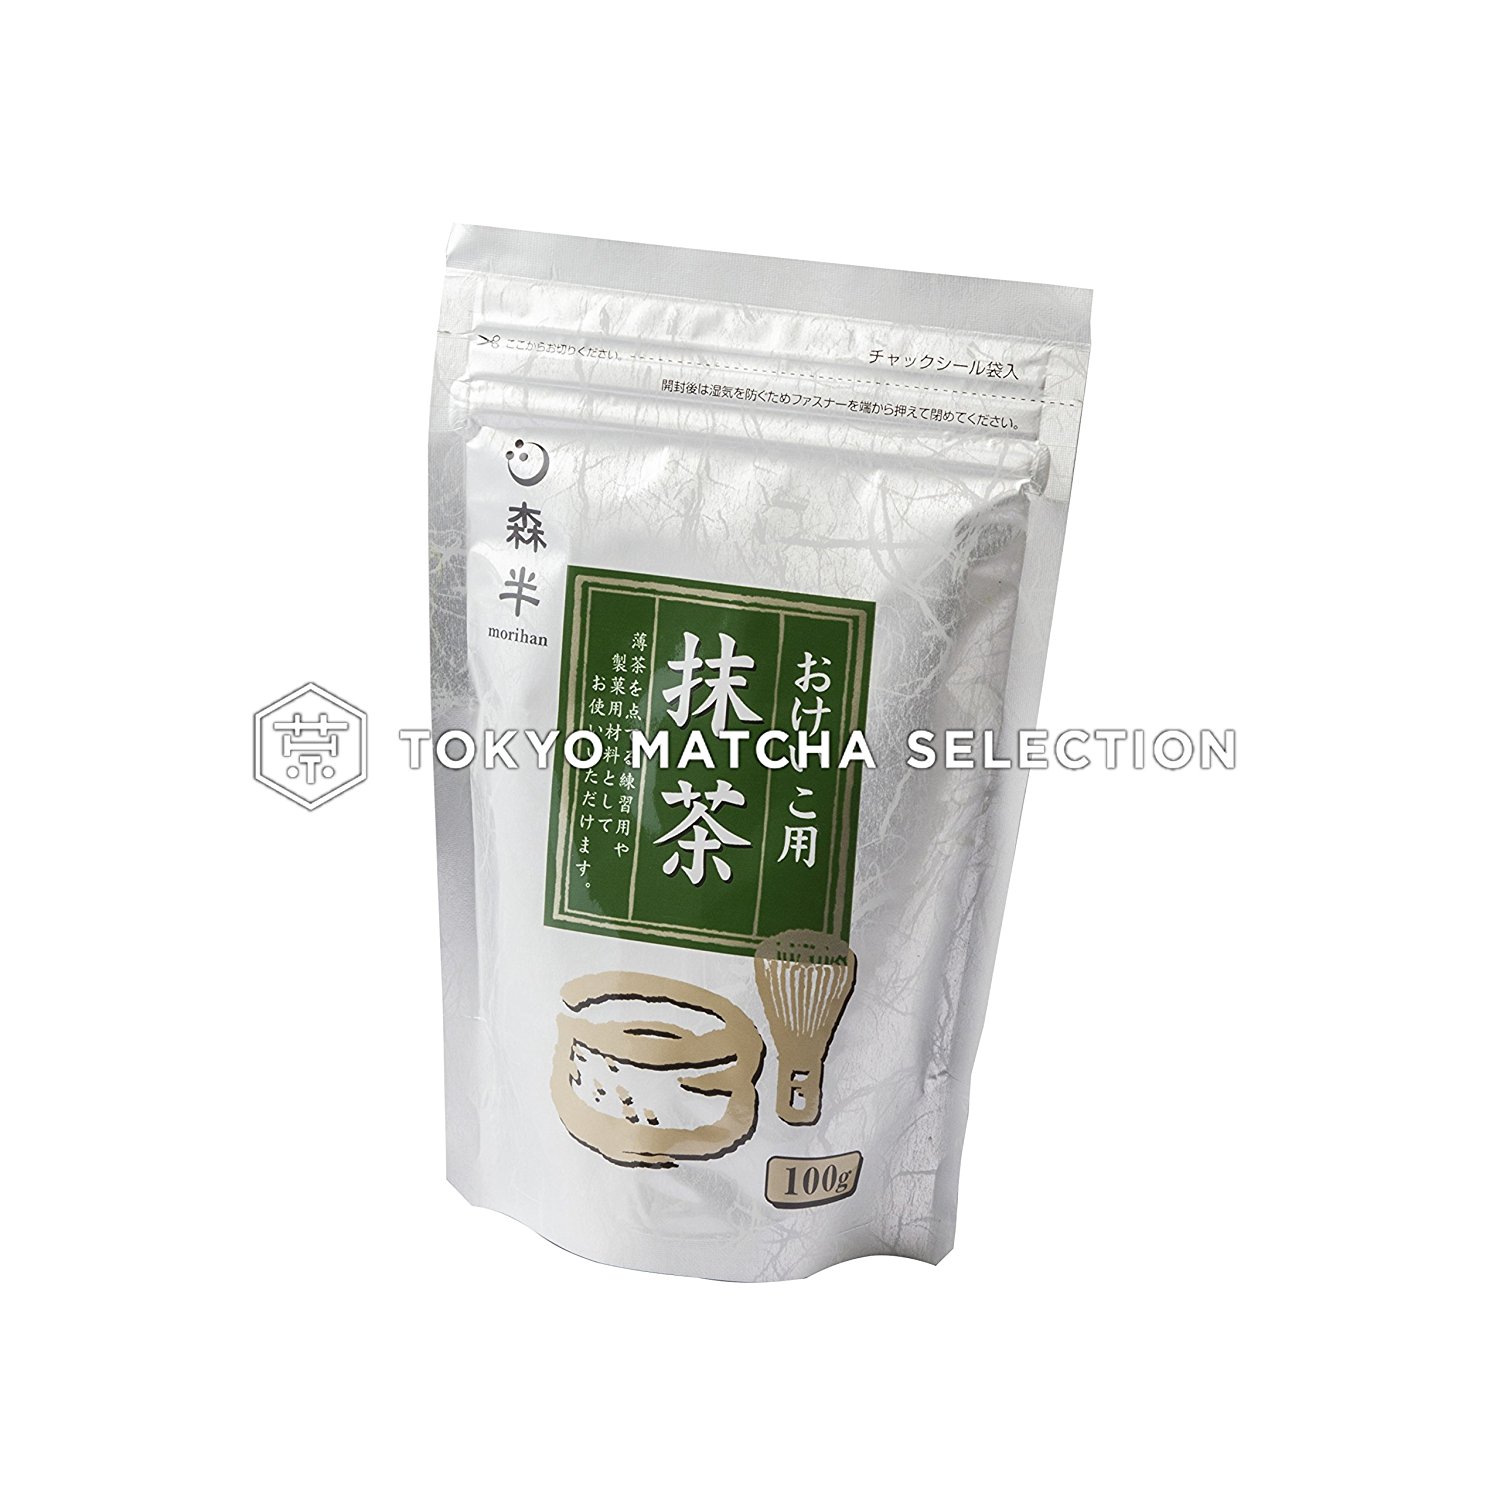 TOKYO MATCHA SELECTION TEA - Japanese Matcha Green Tea Powder 100g (3.52oz) with English Ingredient & Nutrition Info Label